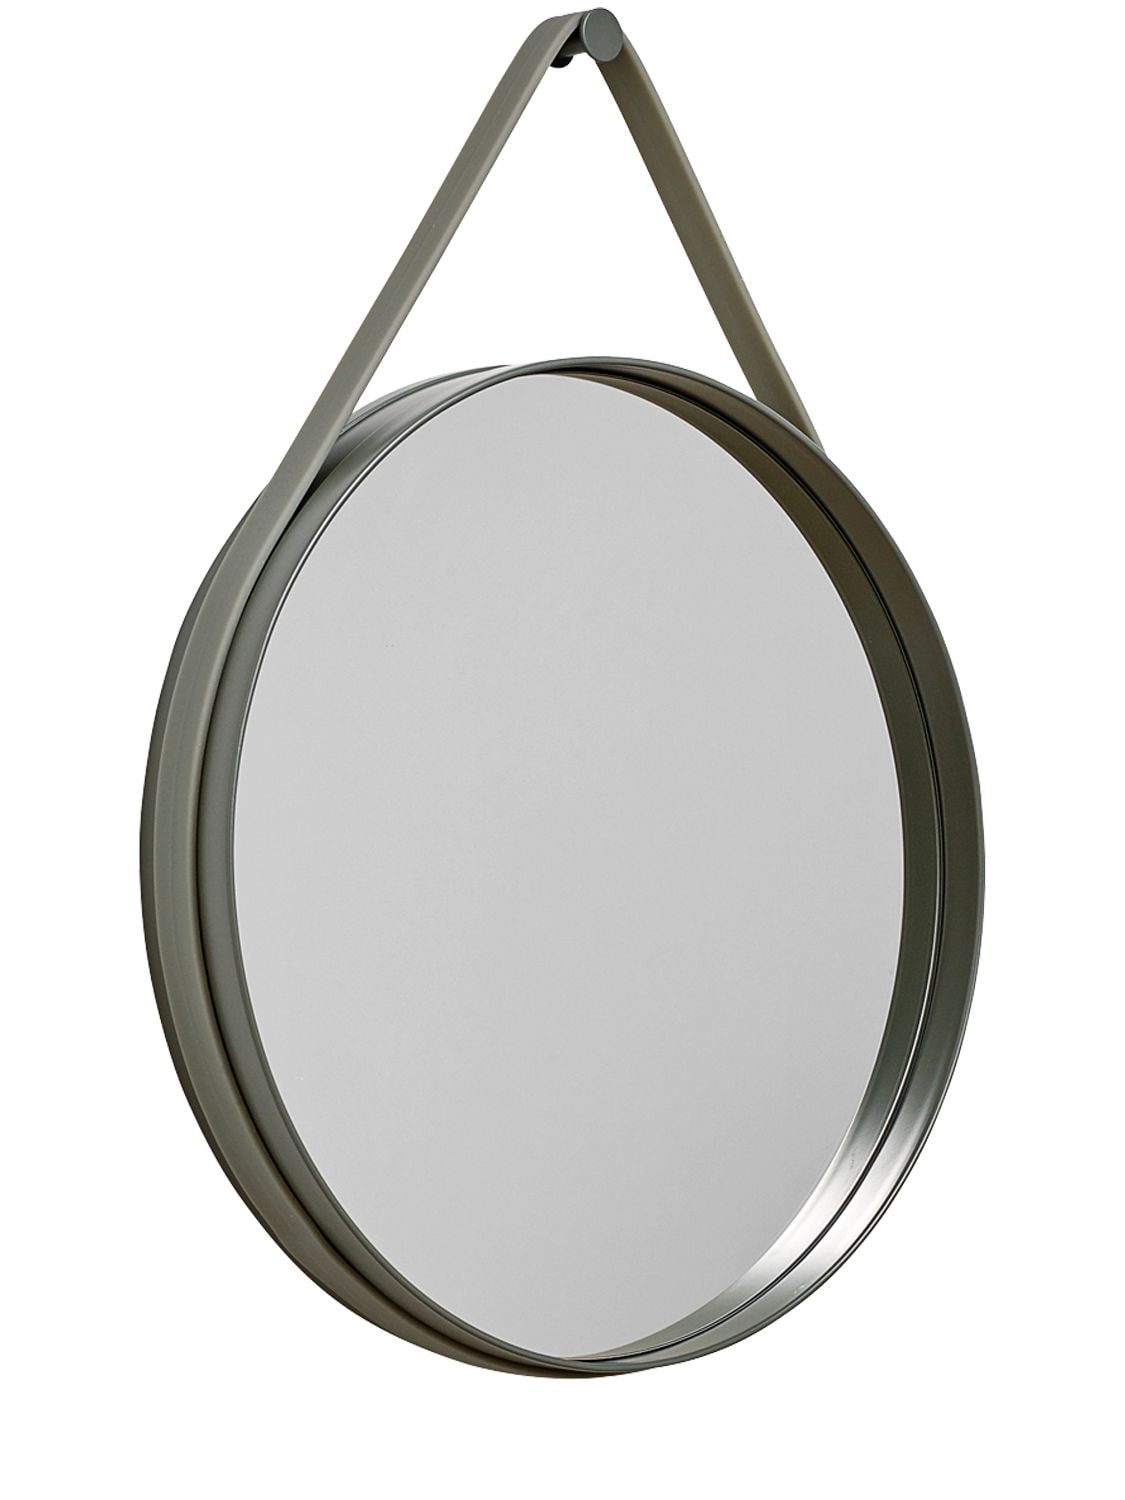 Image of Strap Mirror